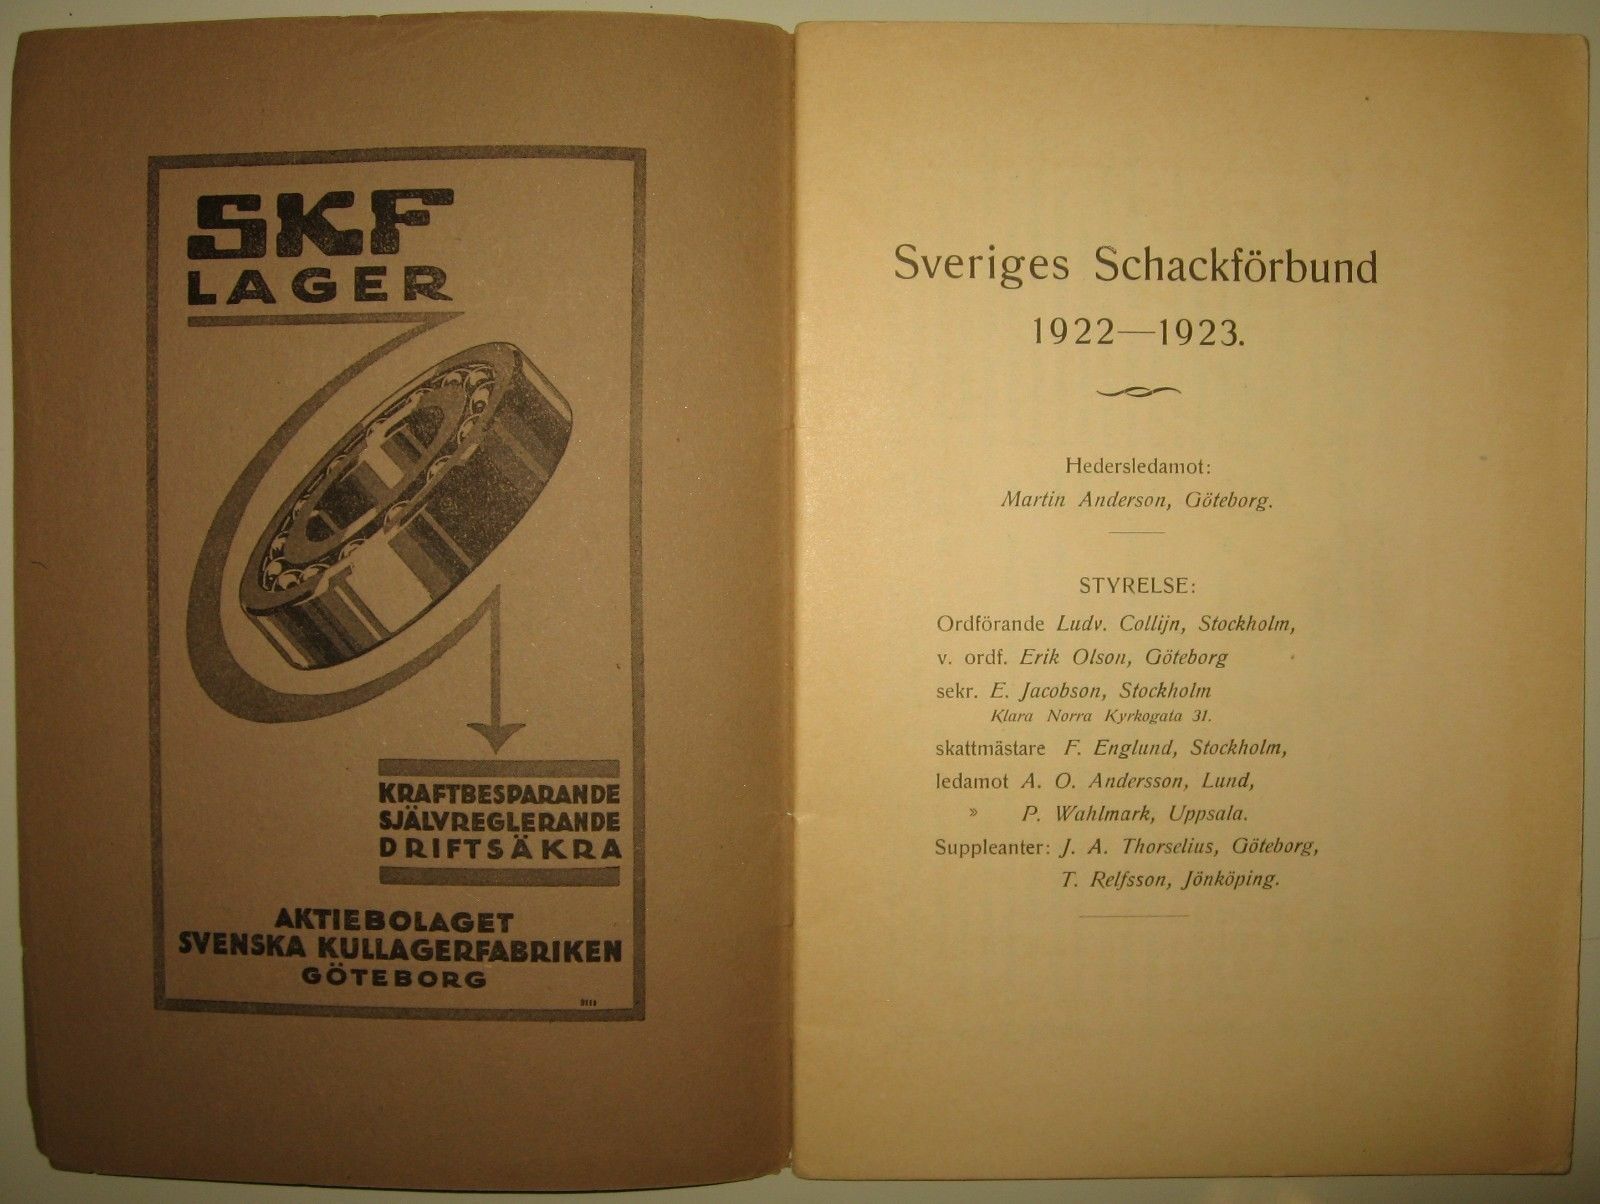 10925.Antique Swedish Chess Book: Dess Styrelse. Sveriges schachfreunds arsbok. 1924